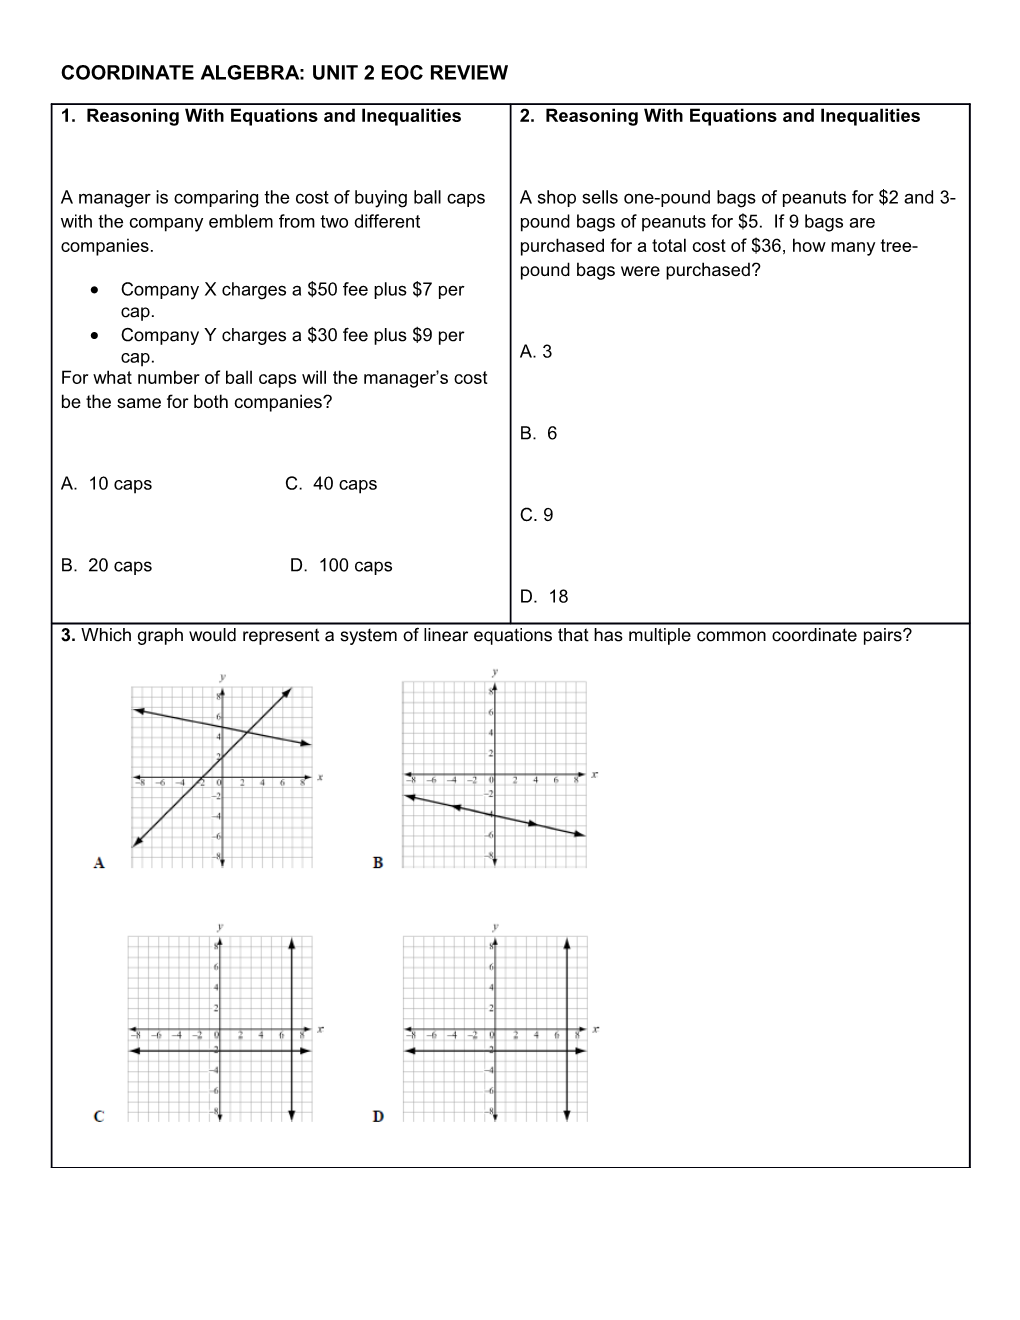 Coordinate Algebra: Unit 2 Eoc Review